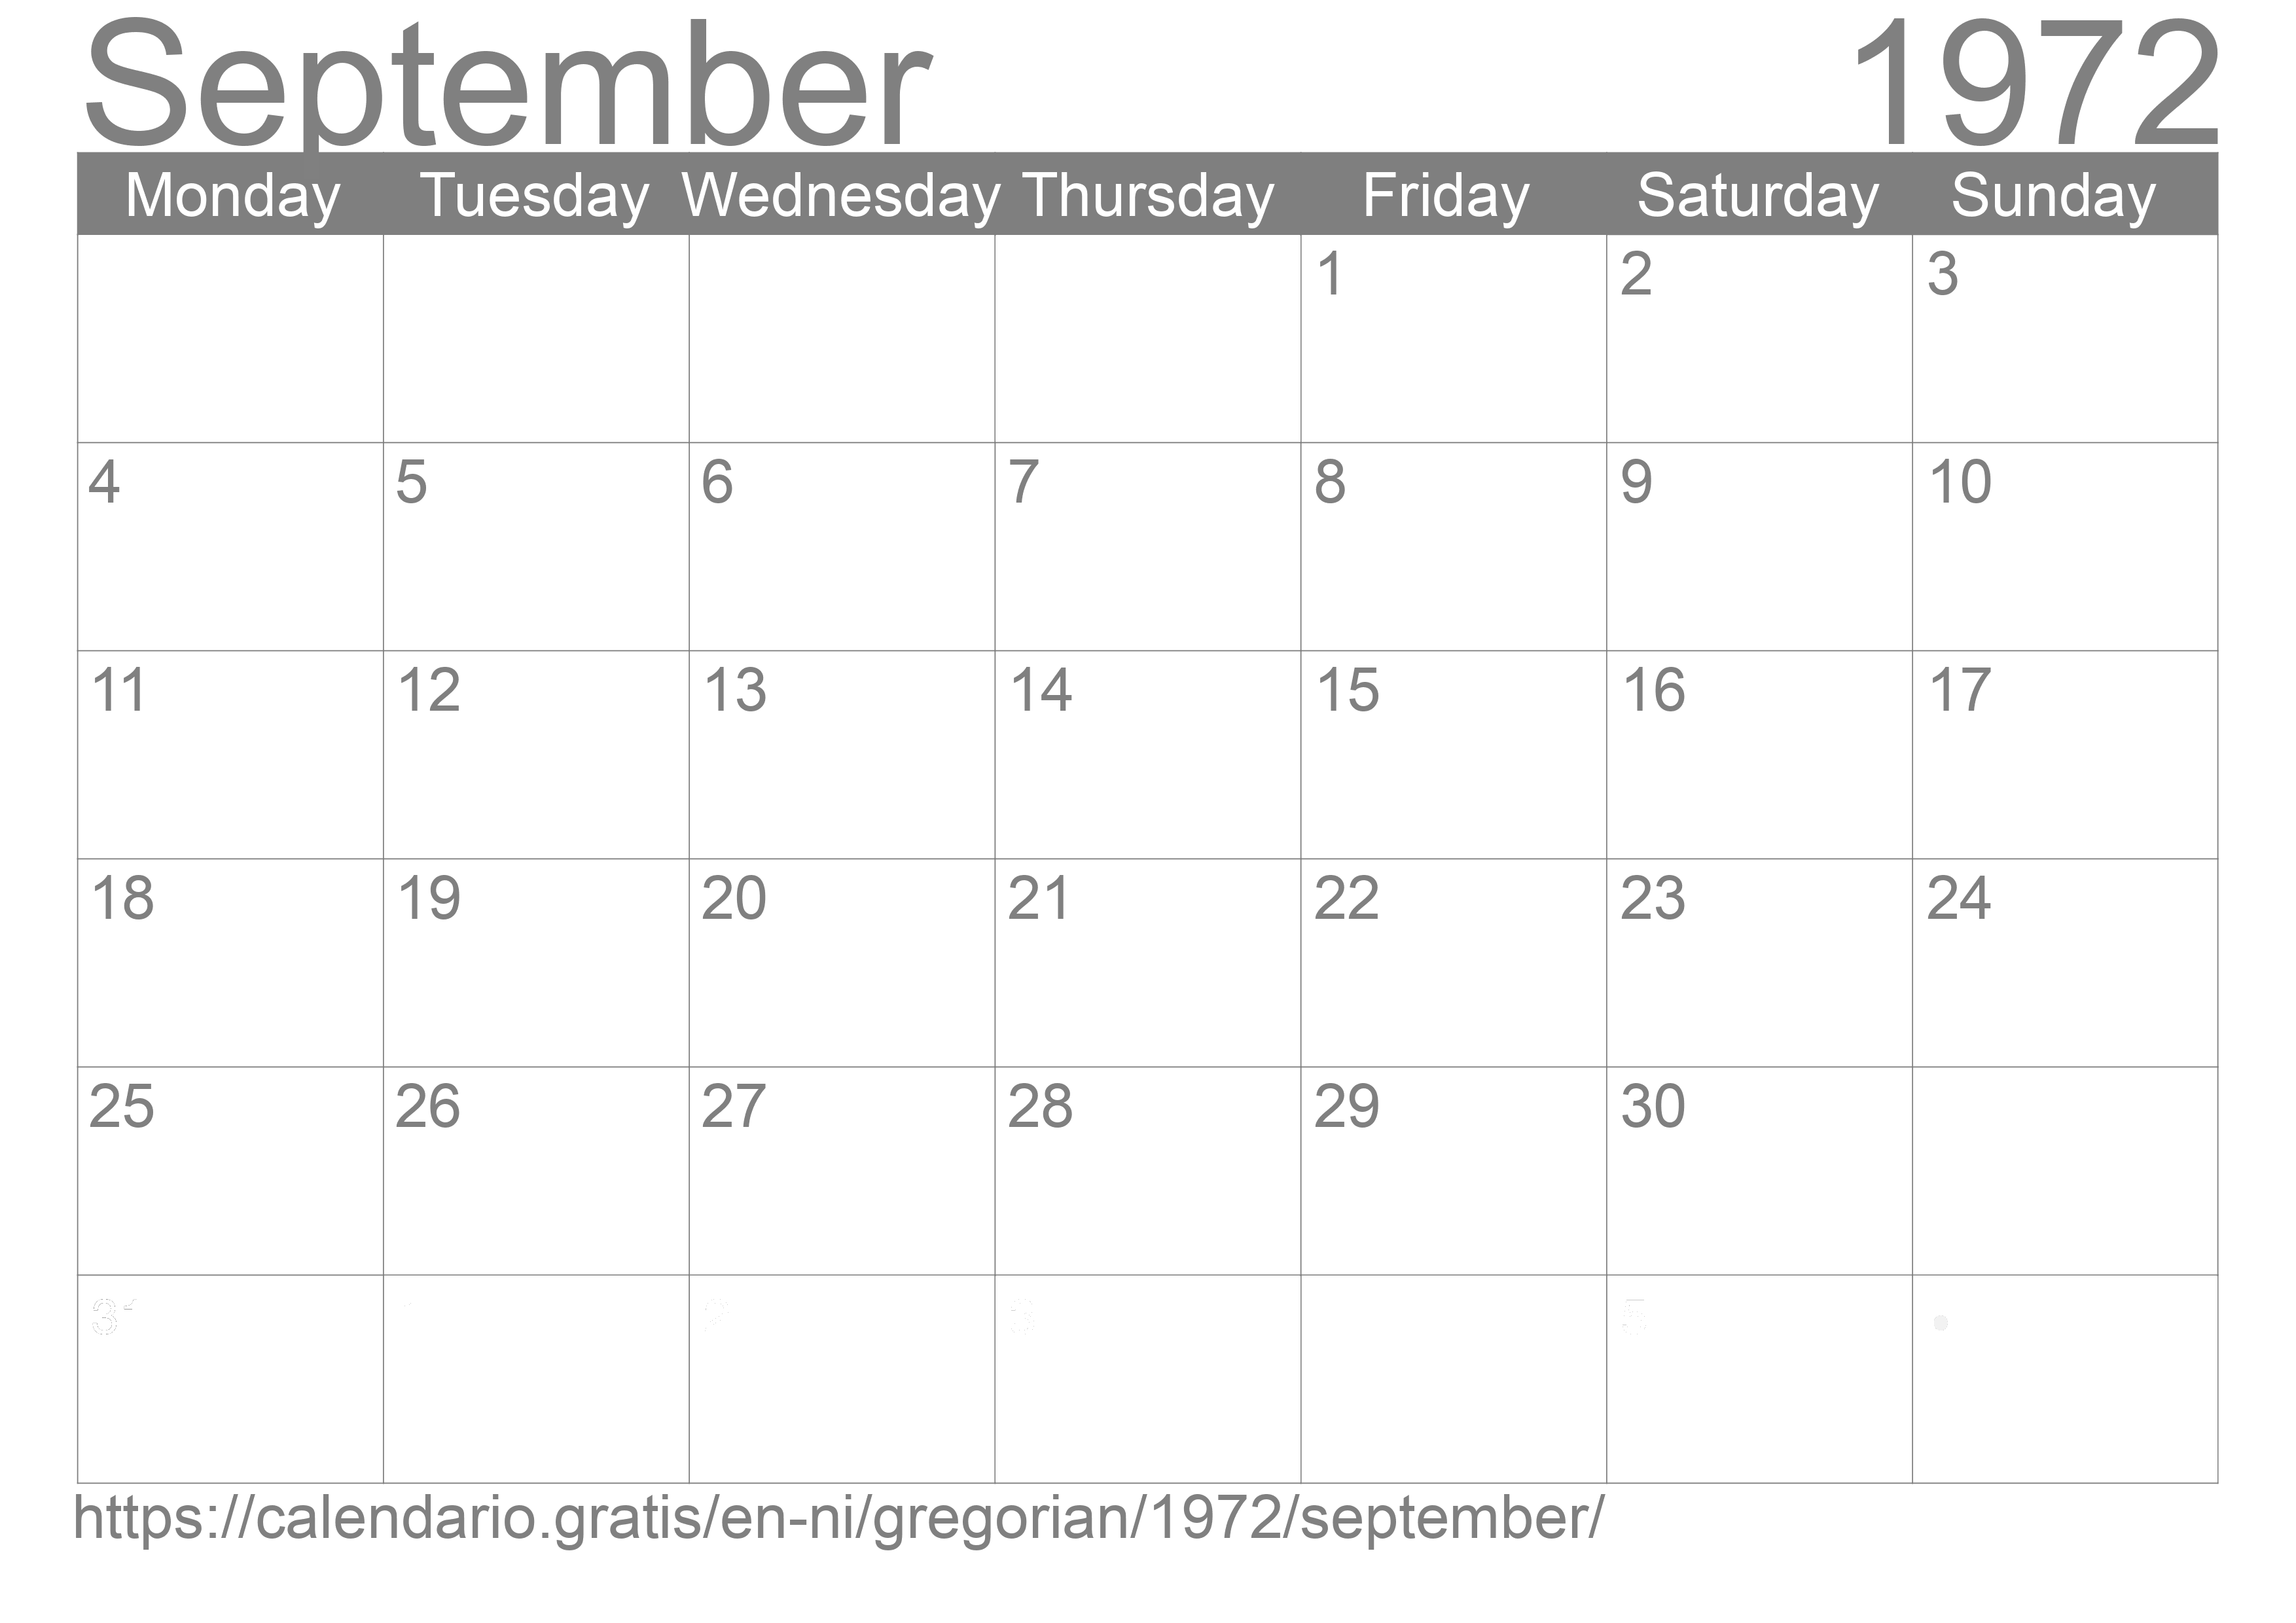 Calendar September 1972 to print